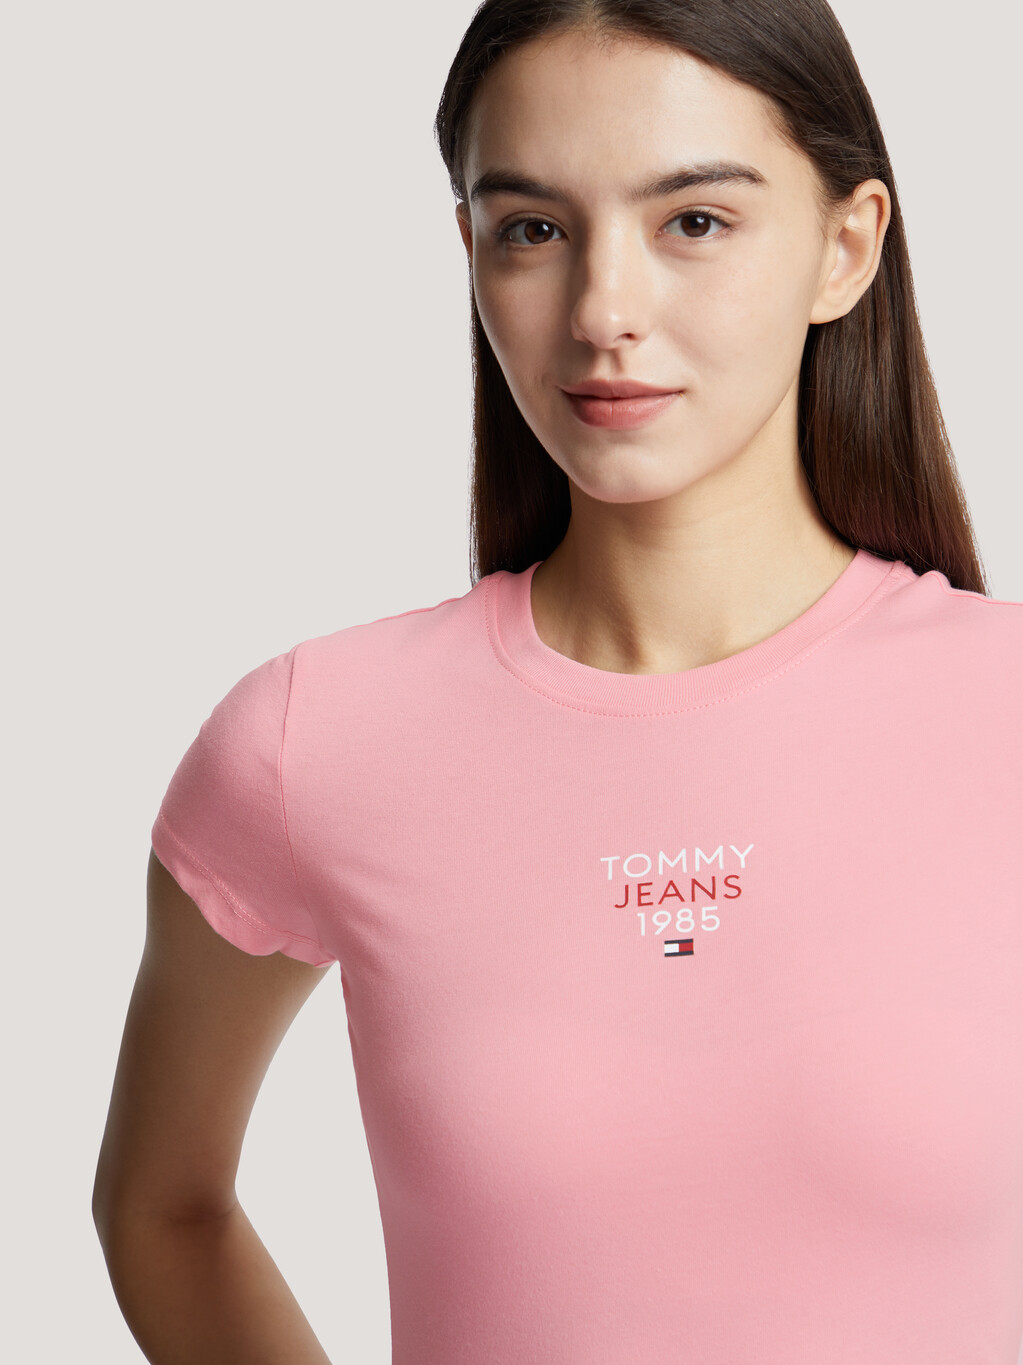 Essential 1985 Slim T-Shirt, Ballet Pink, hi-res